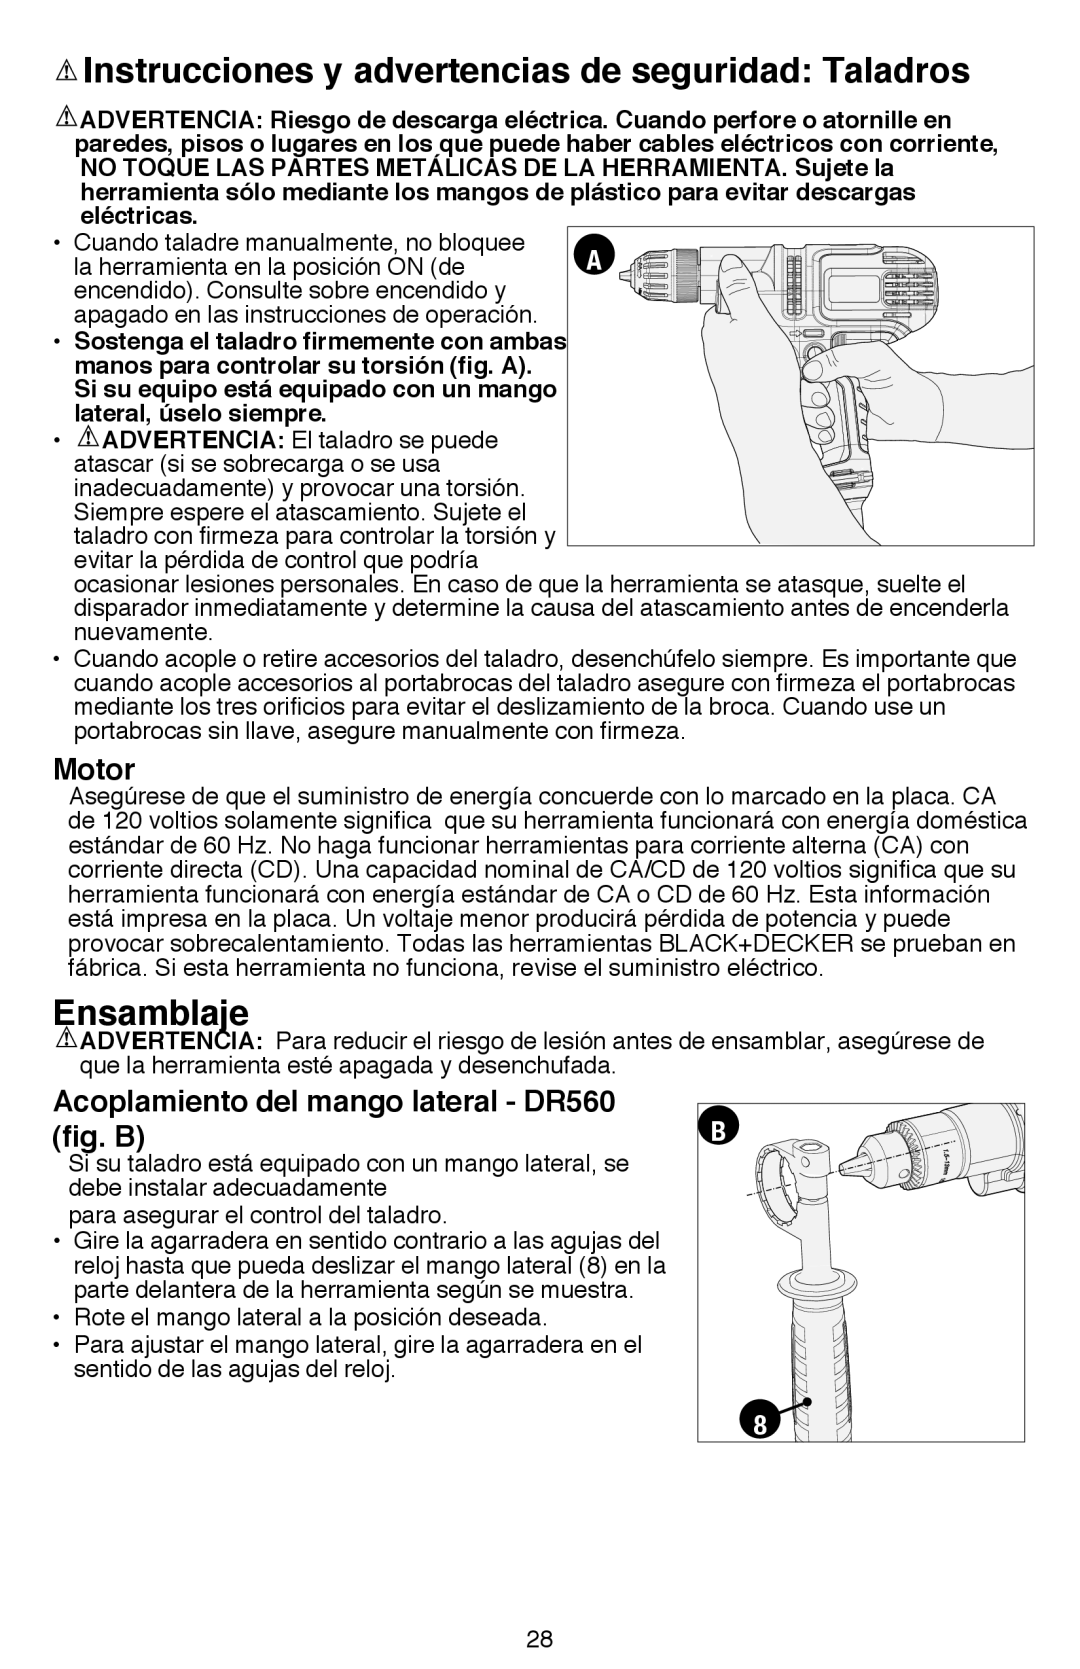 Black & Decker DR260BR instruction manual Ensamblaje, Acoplamiento del mango lateral - DR560 fig. B, Motor 